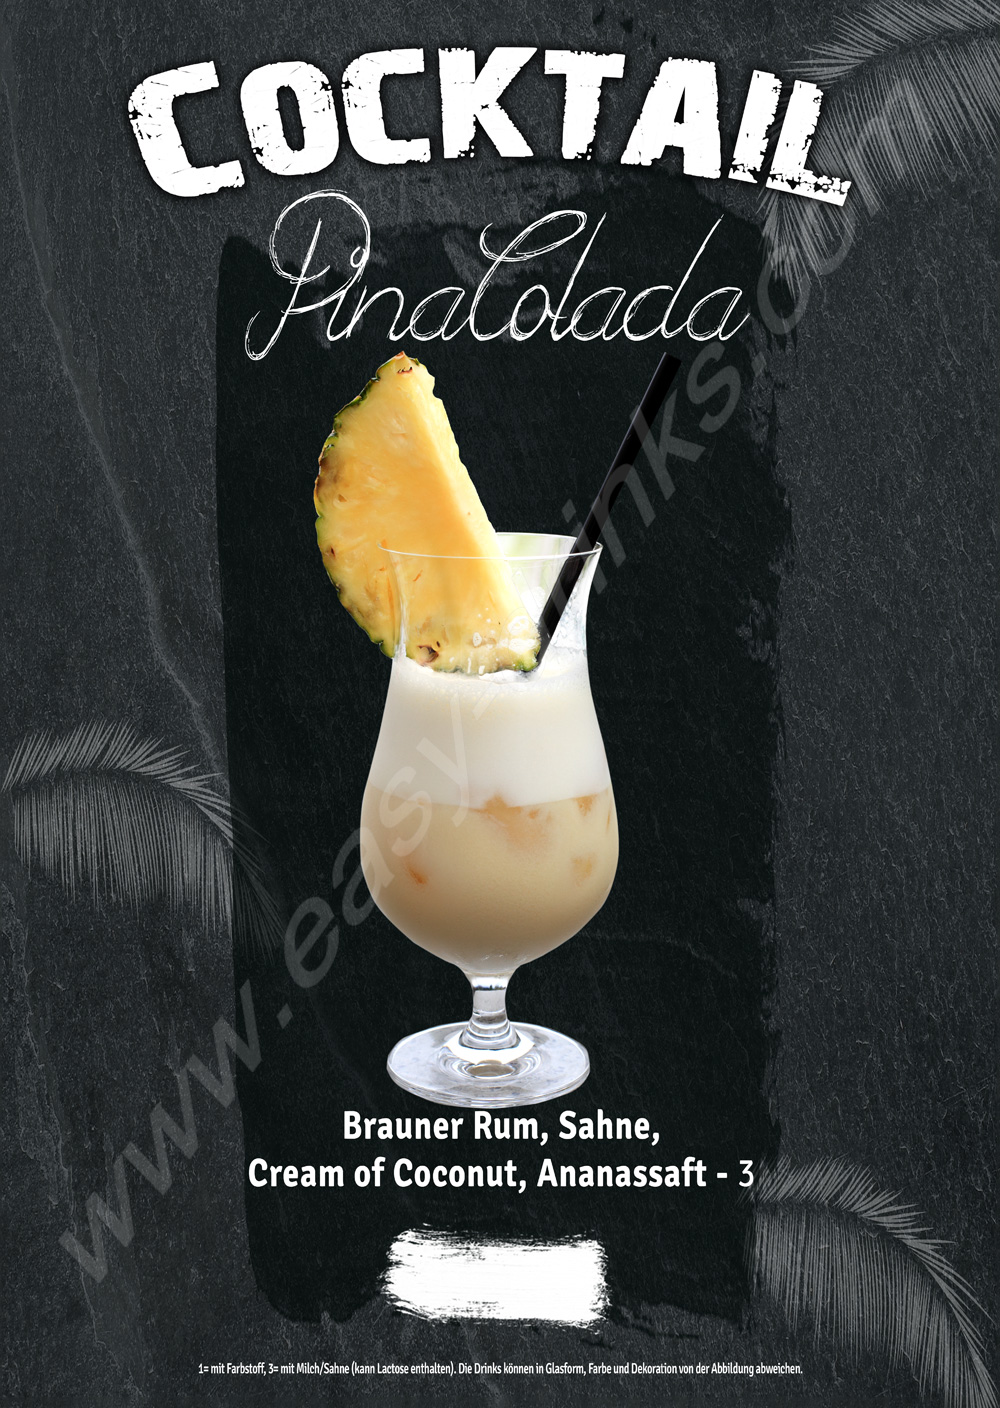 Pina Colada / Fertigcocktail / 22% Vol. 0,7 ltr. / easy drinks